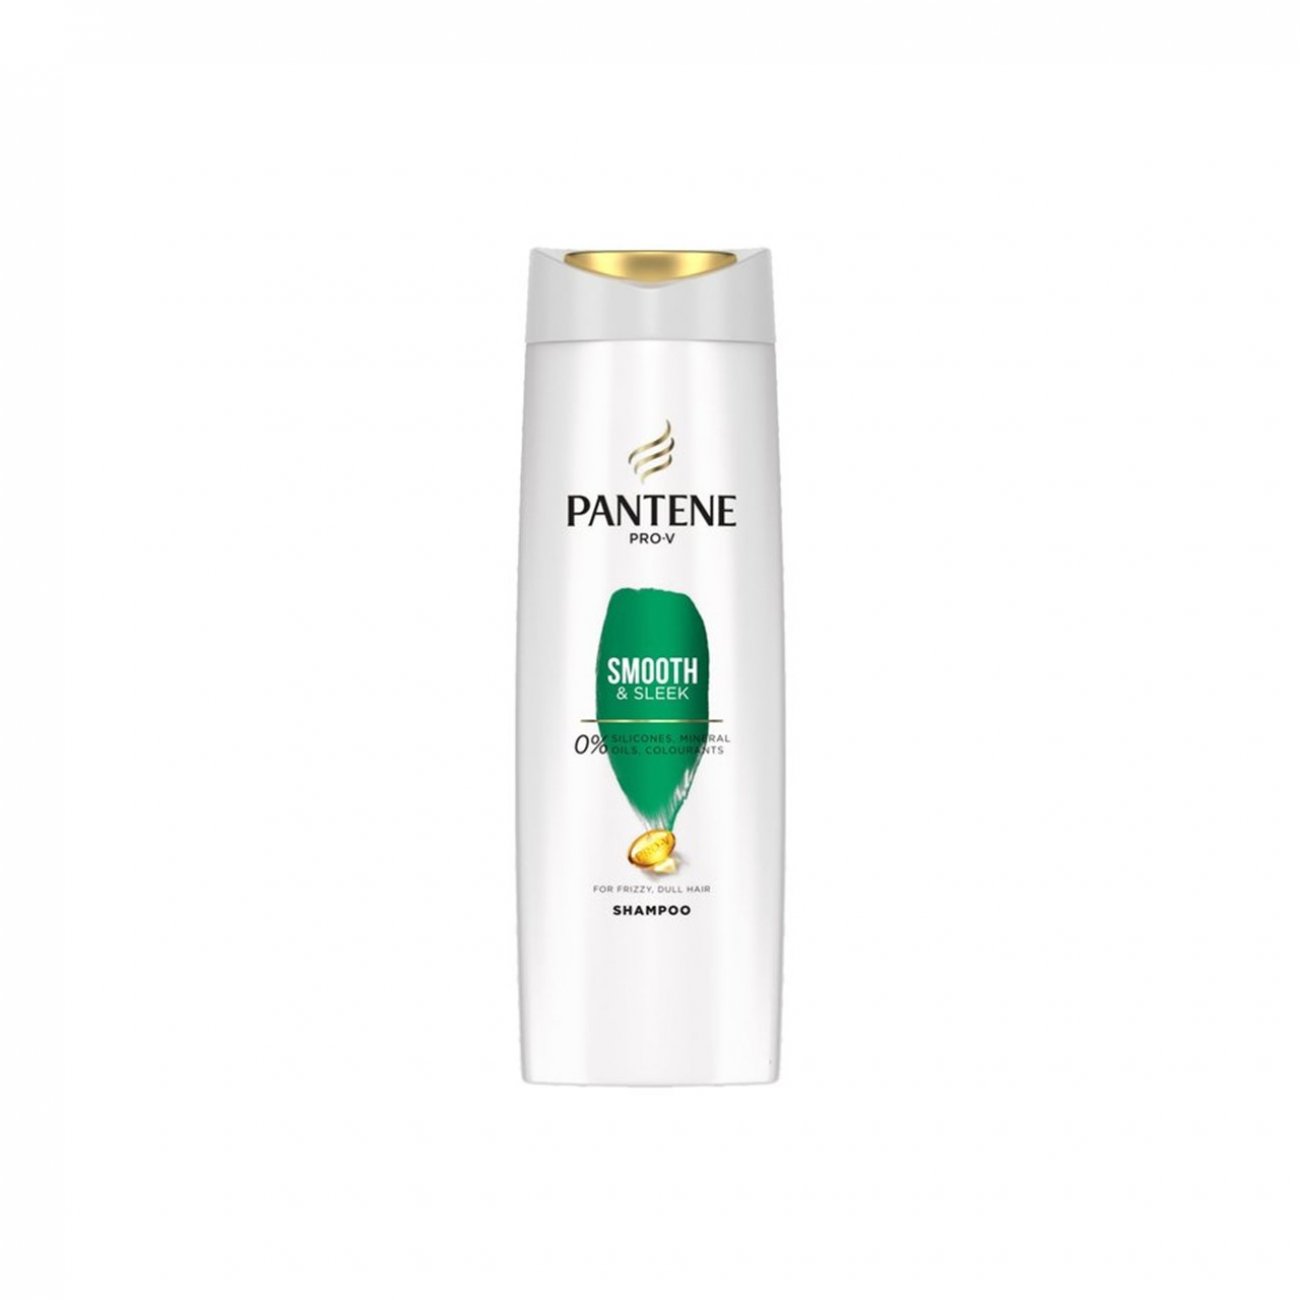 Pantene Moisture Renewal Shampoo Review 2023